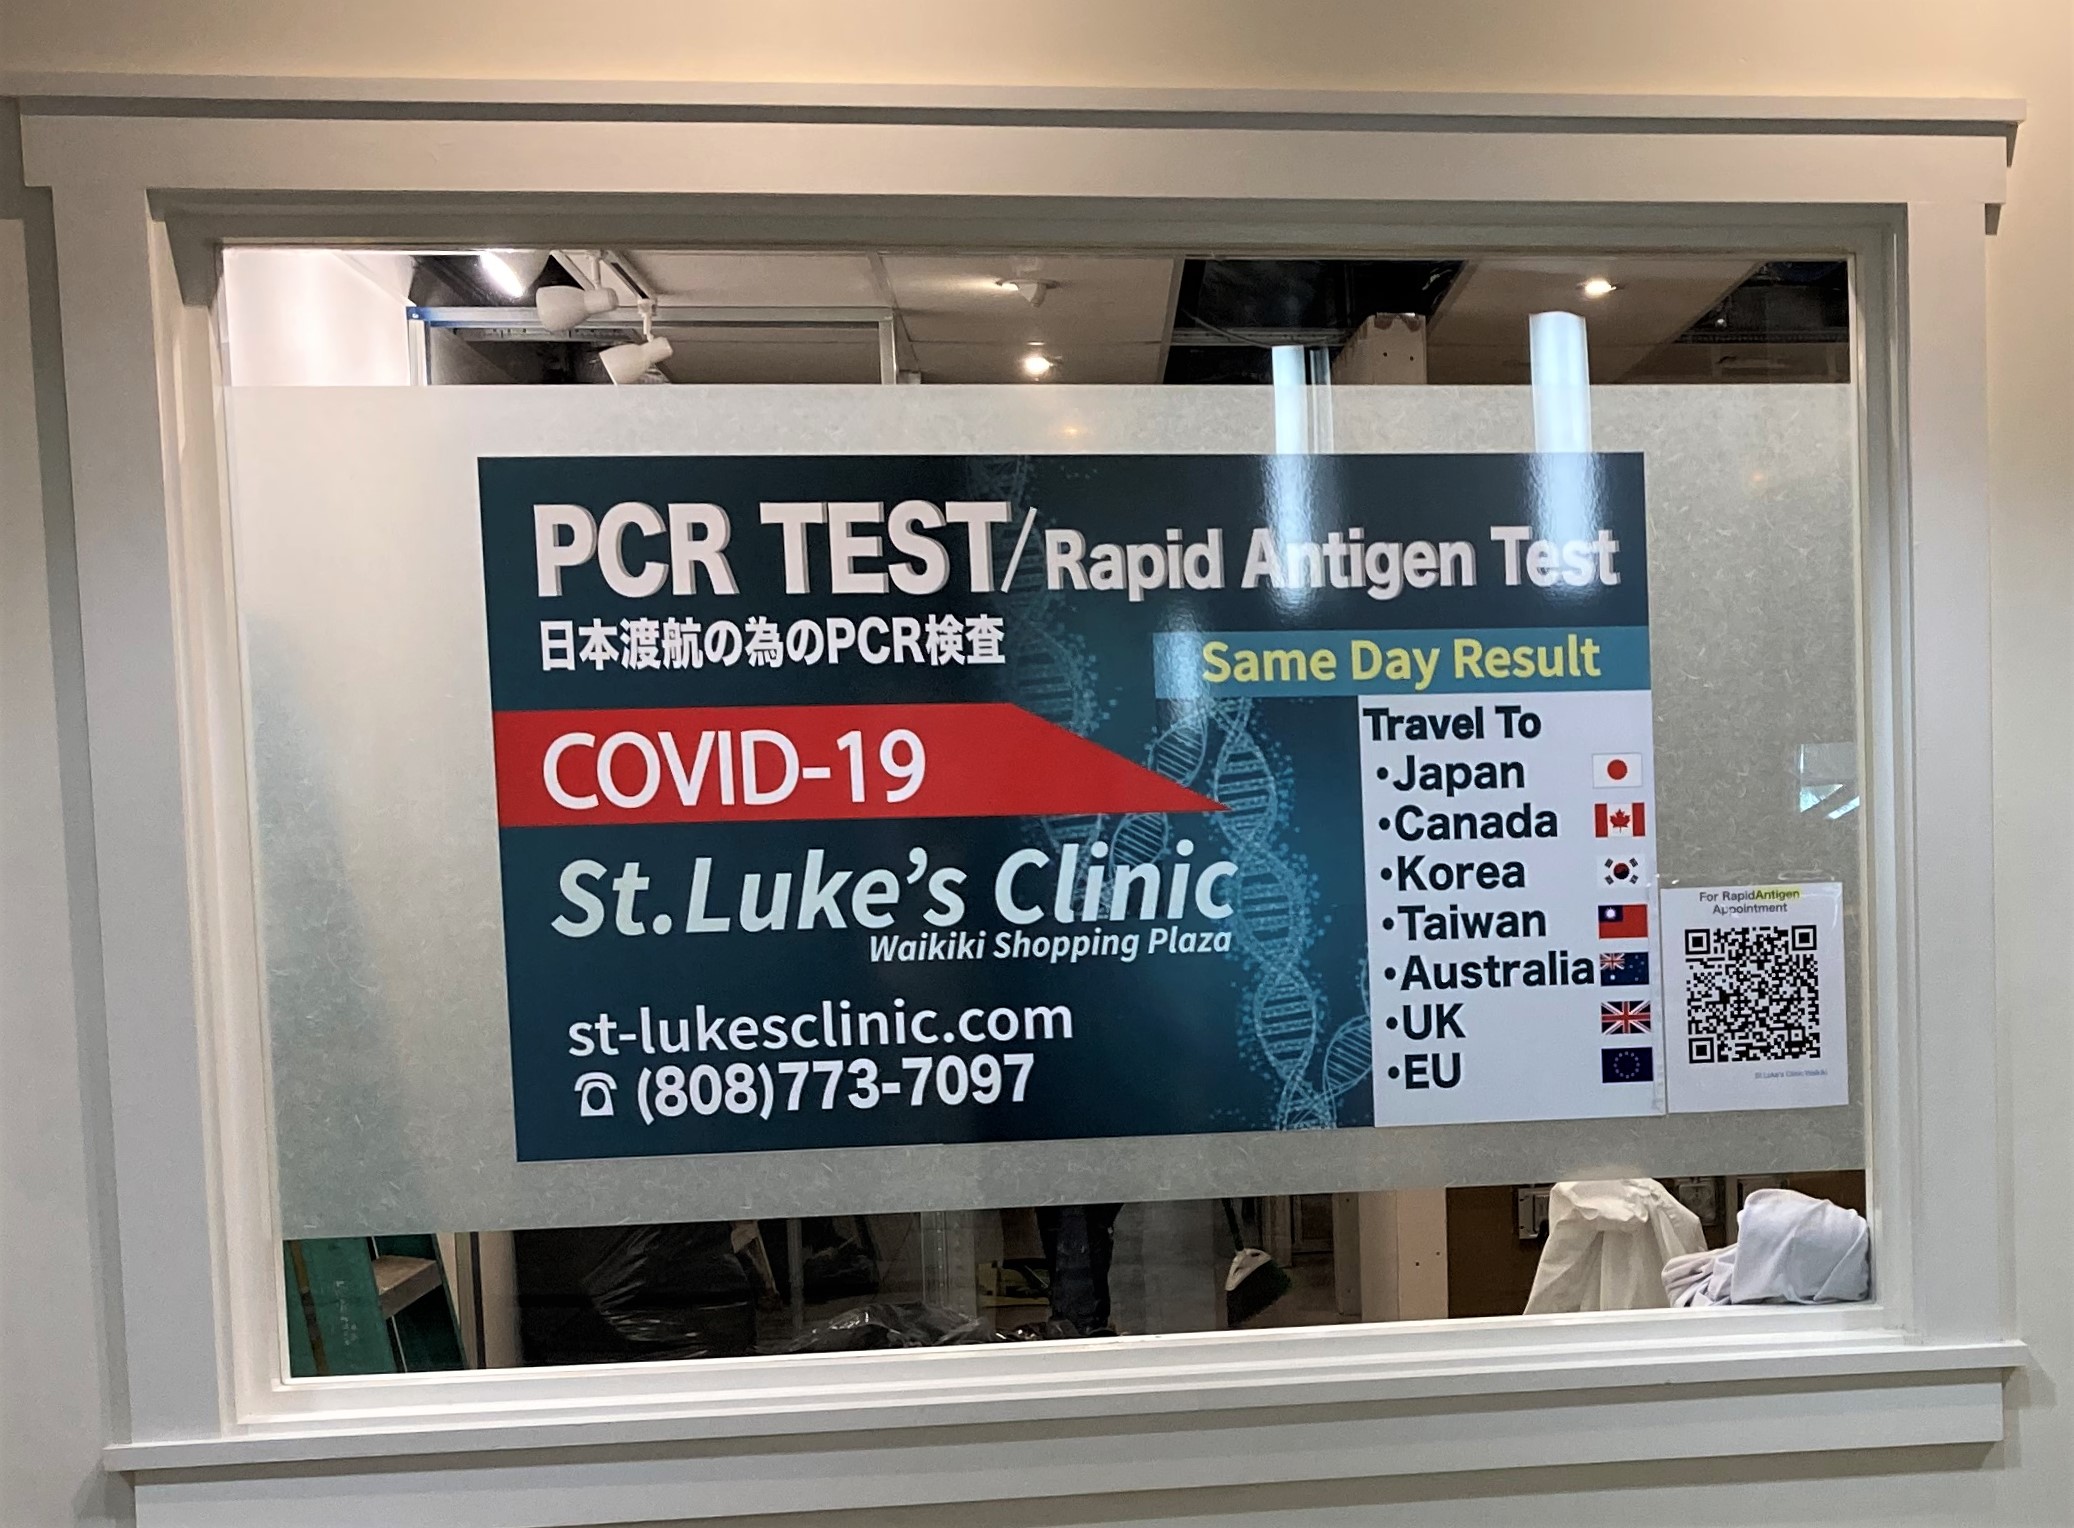 St. Luke's Clinic PCR Test